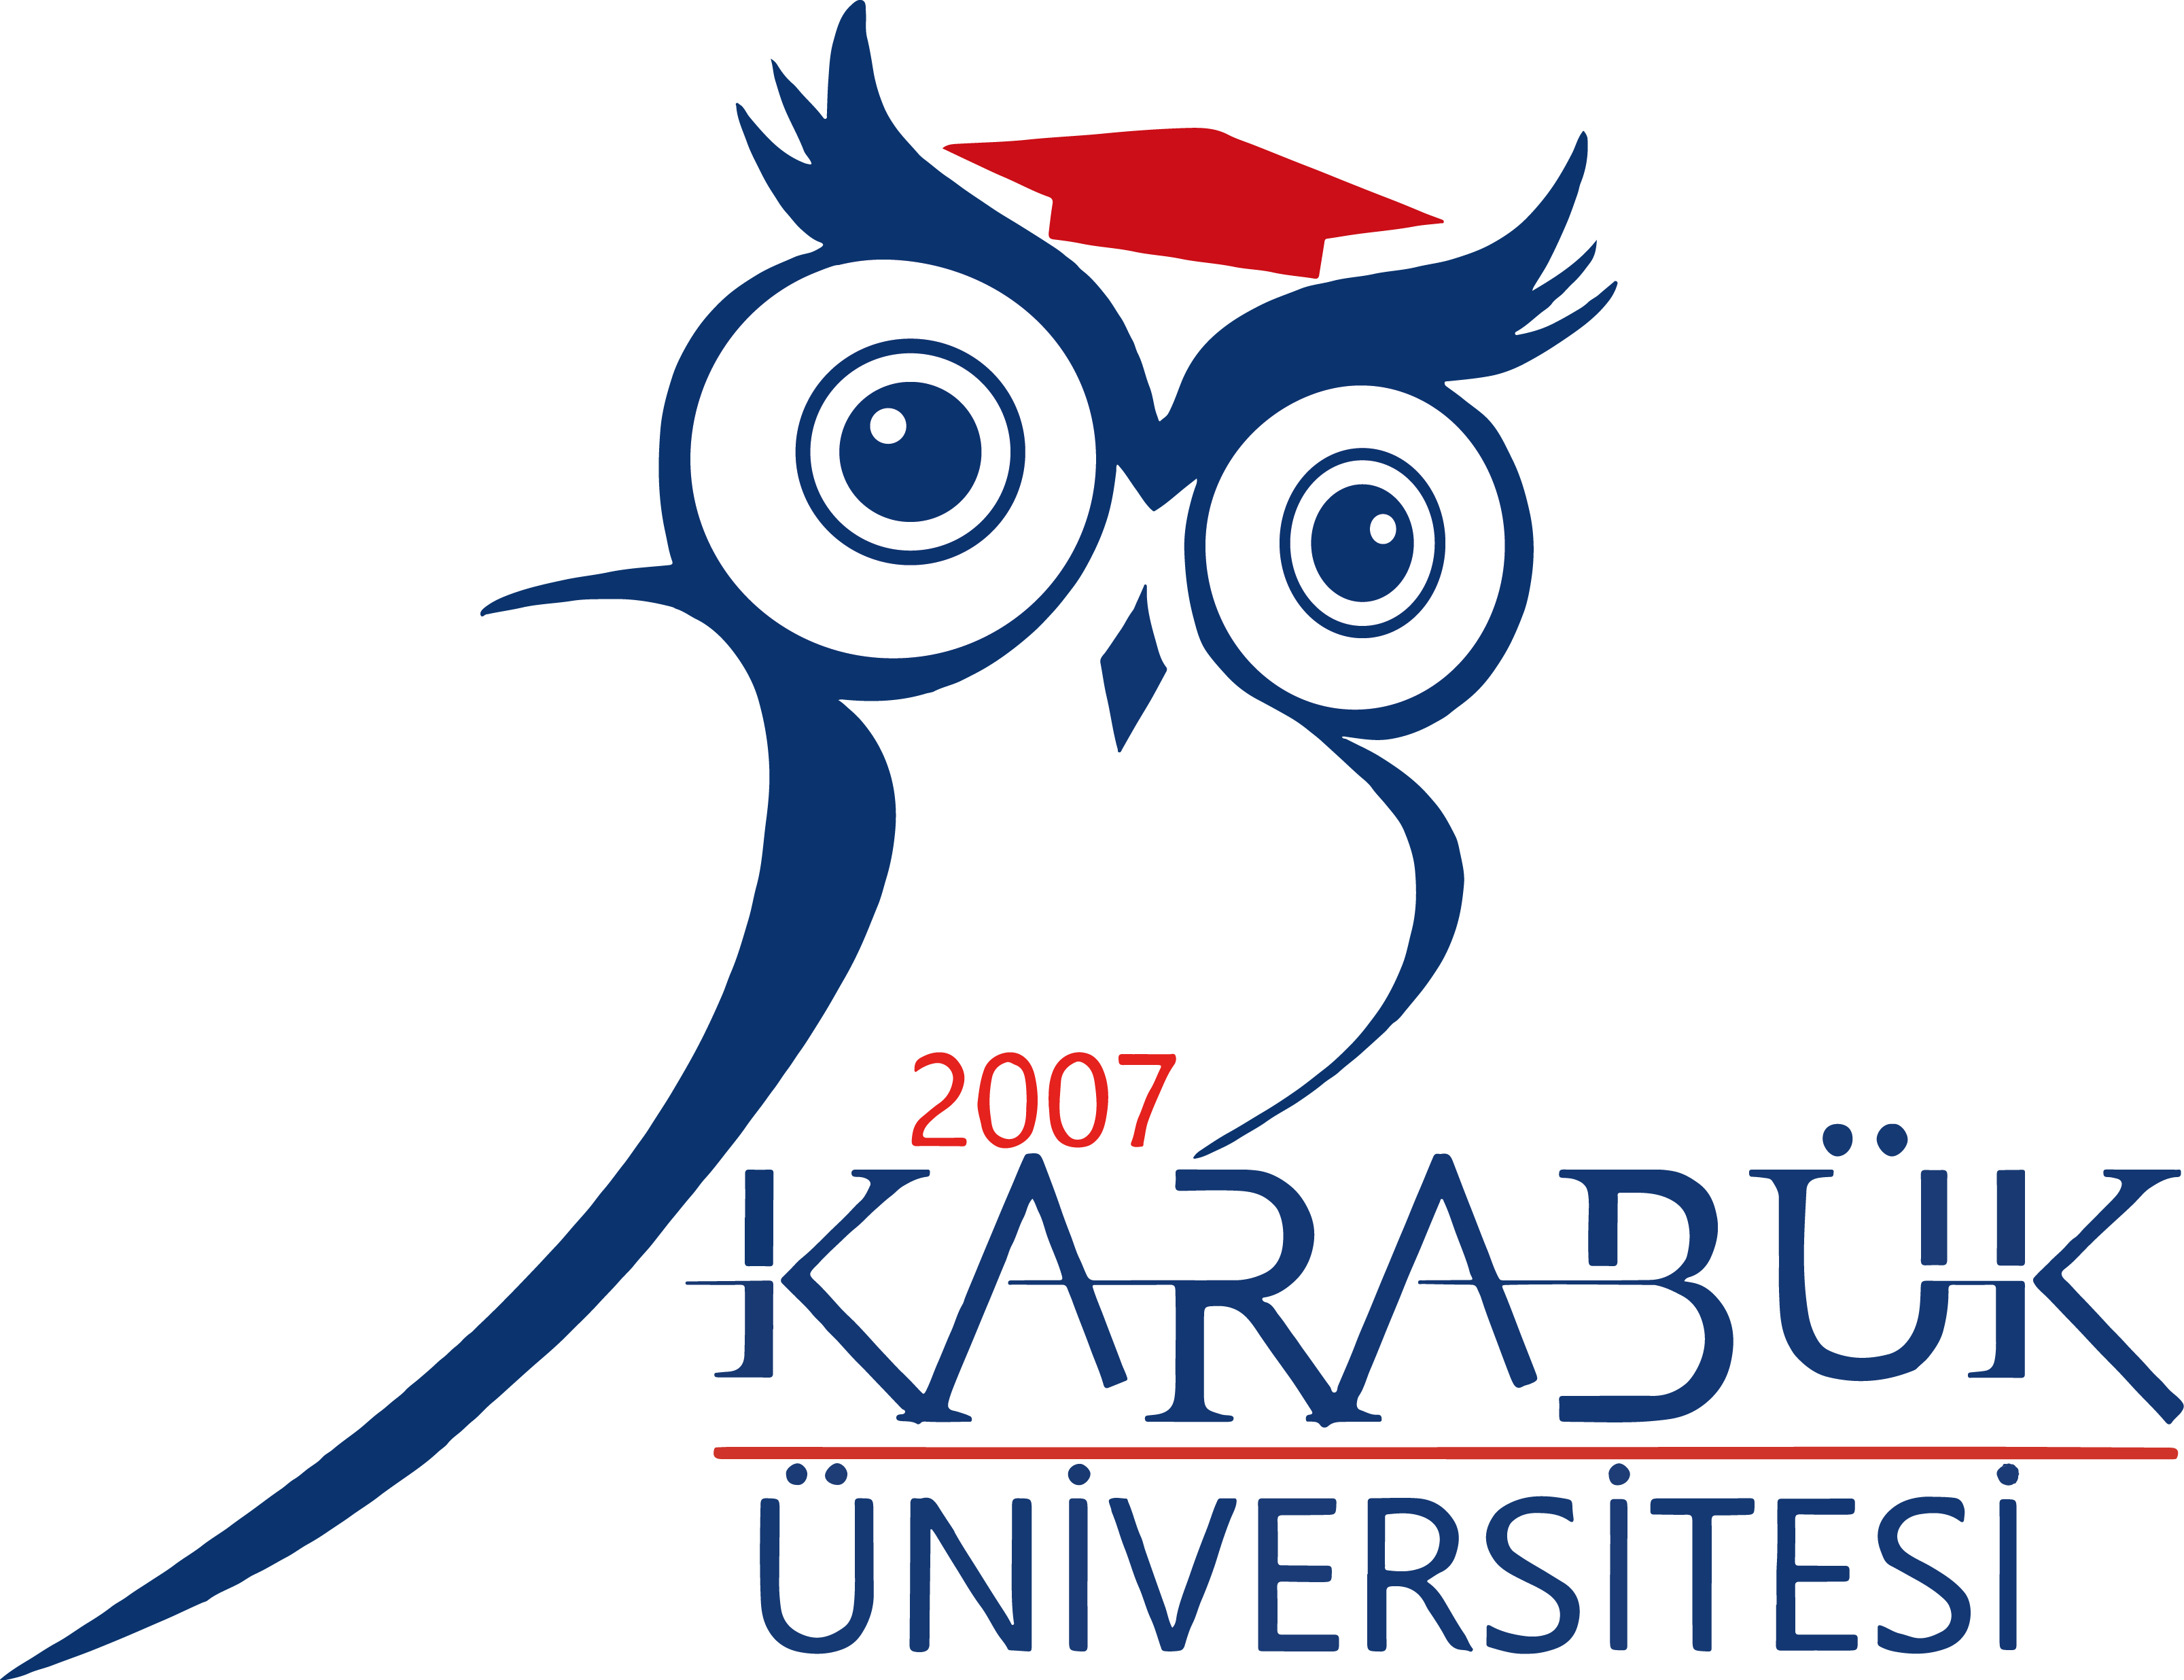 KARABUK UNIVERSITY